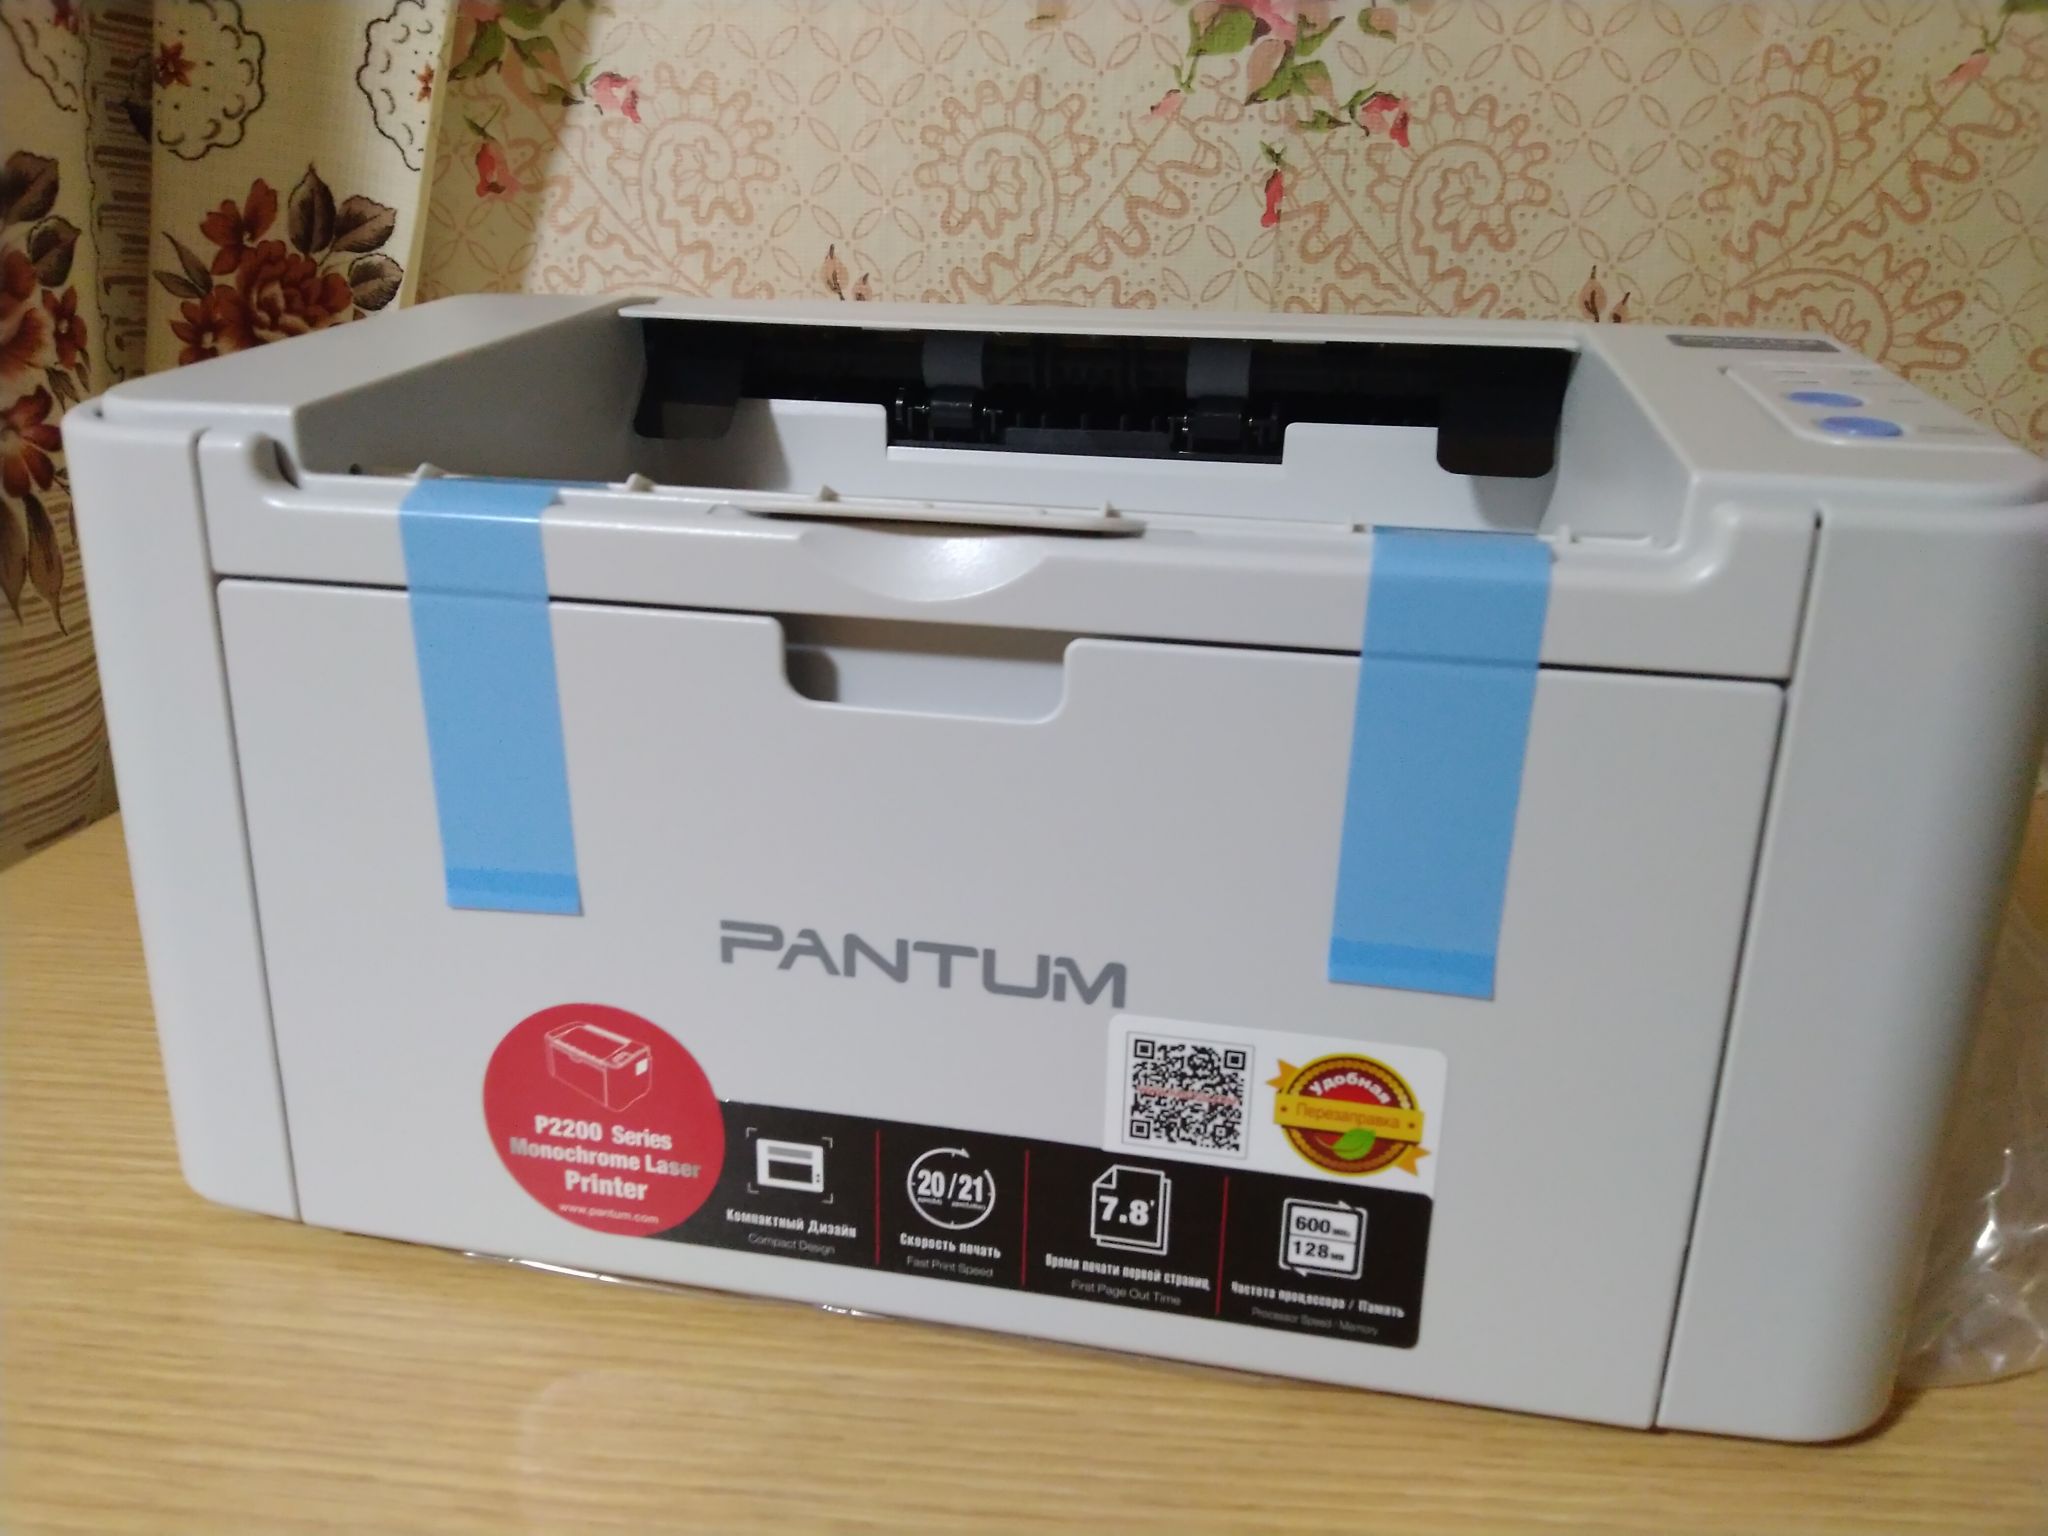 P2200 series драйвер. Принтер лазерный Pantum p2200. Pantum принтер p2200 принтер. Pantum p2200 картридж. Принтер лазерный Pantum p2200 лазерный p2200 характеристики.